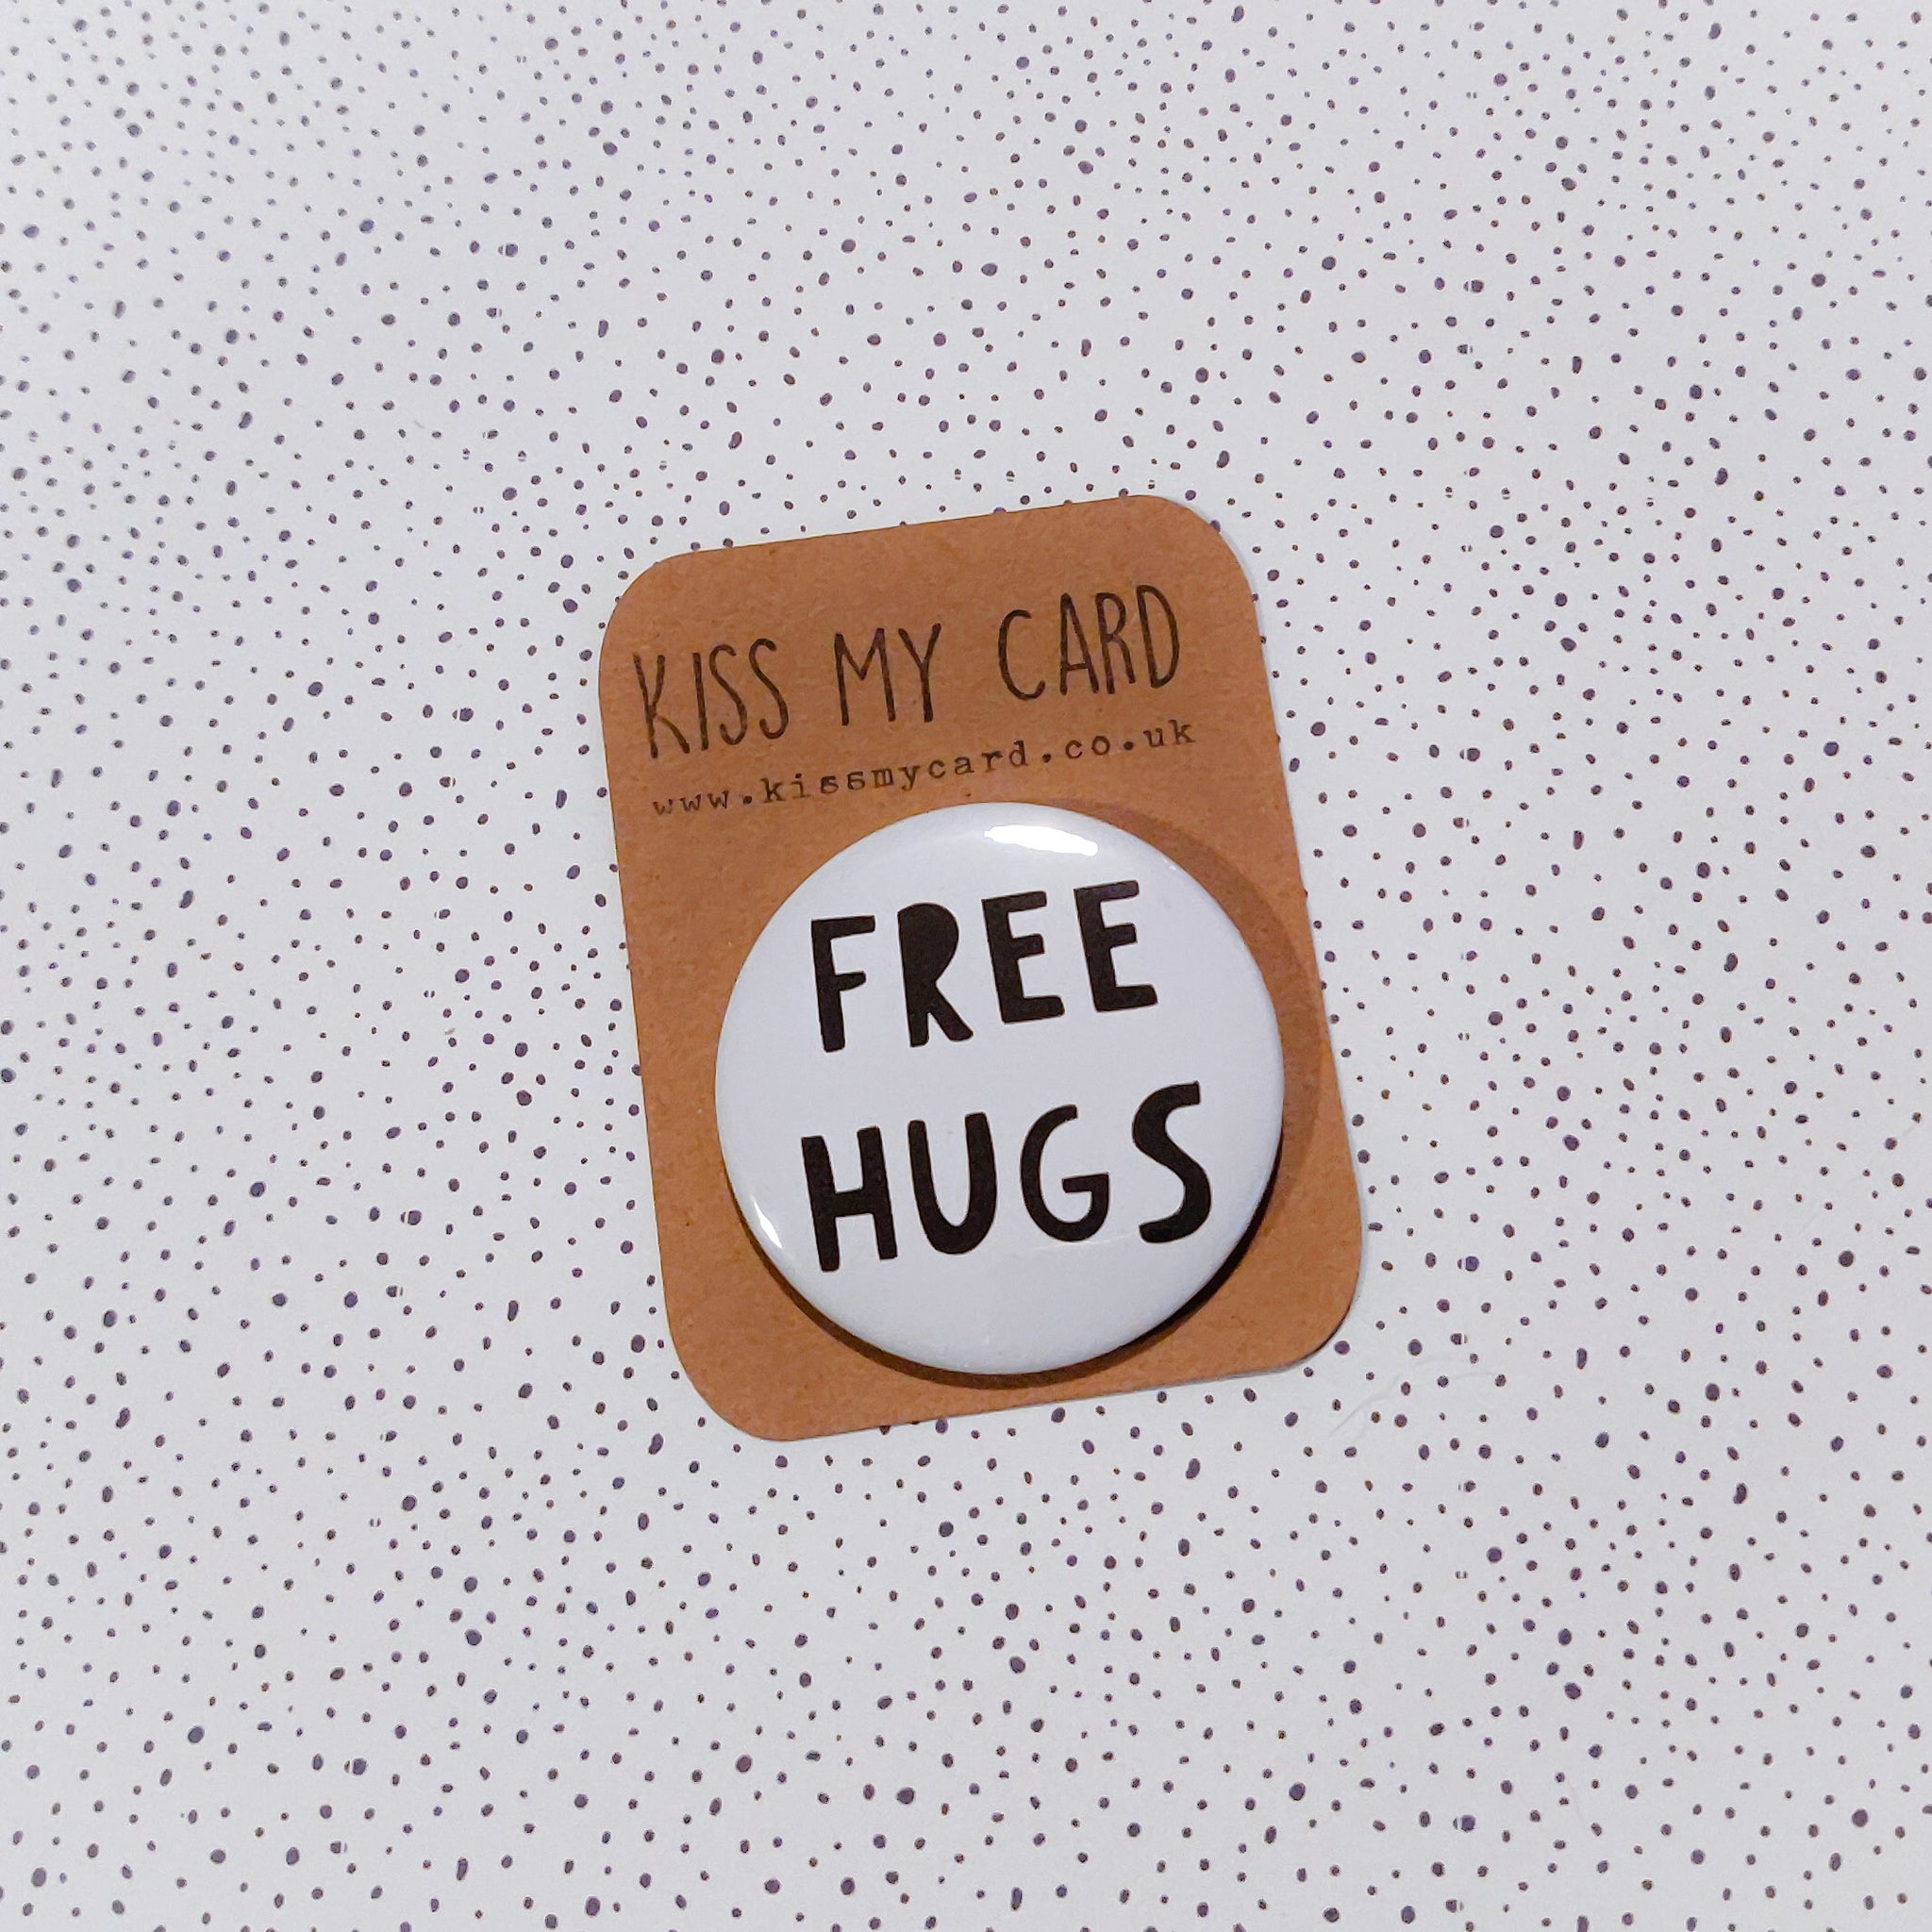 Free Hugs badge - 58mm